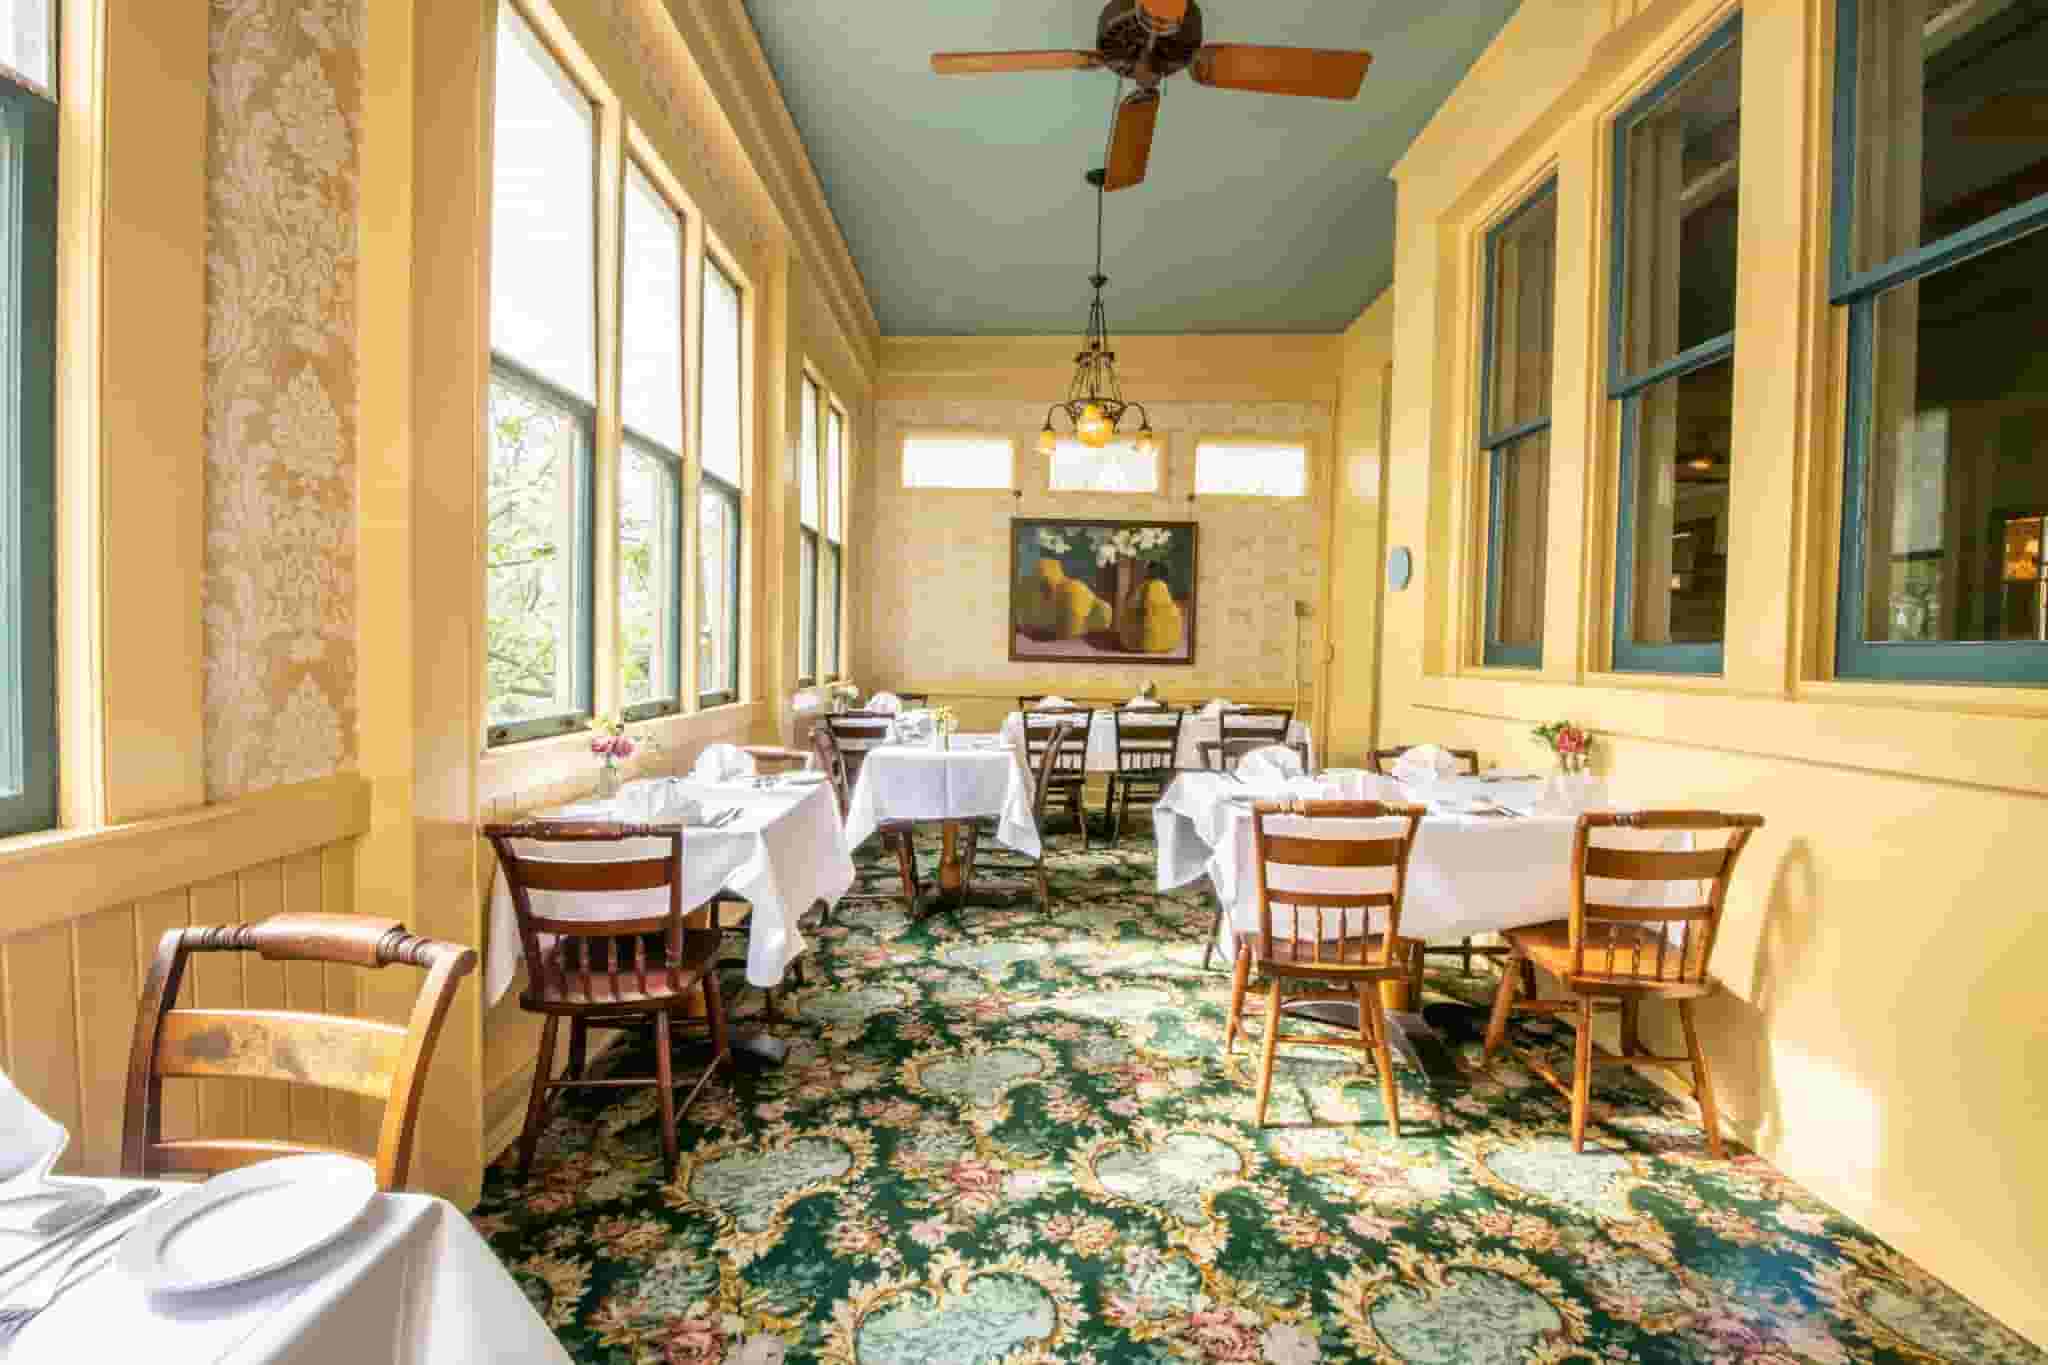 Restaurants in Savannah